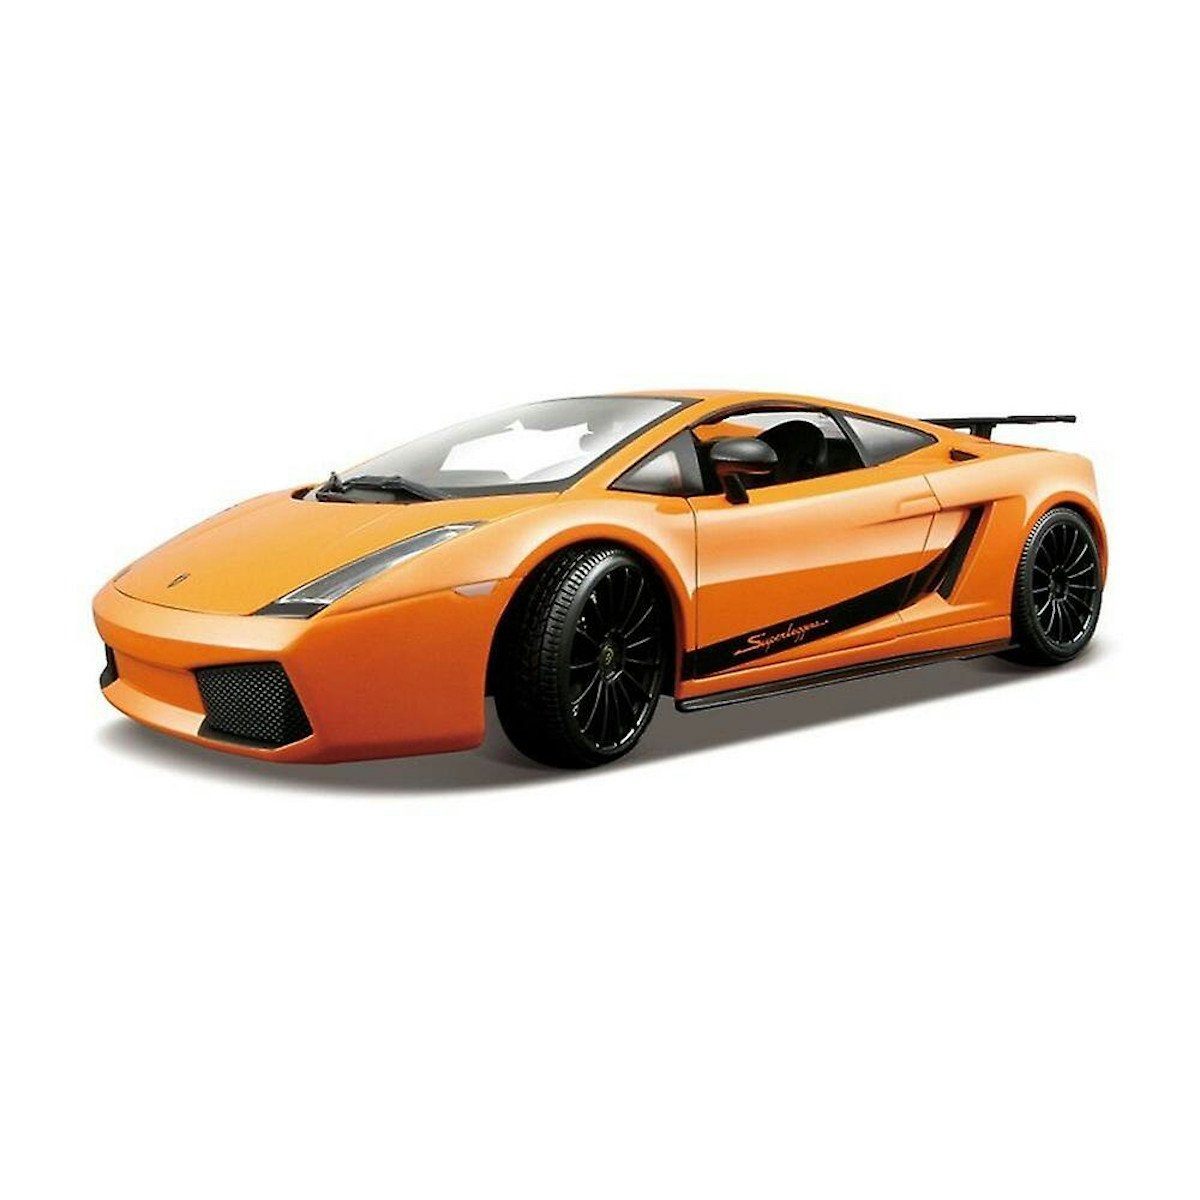 Maisto® Modellauto Lamborghini Gallardo Superleggera '07 orange, Maßstab 1:18, Originalgetreue Innenausstattung